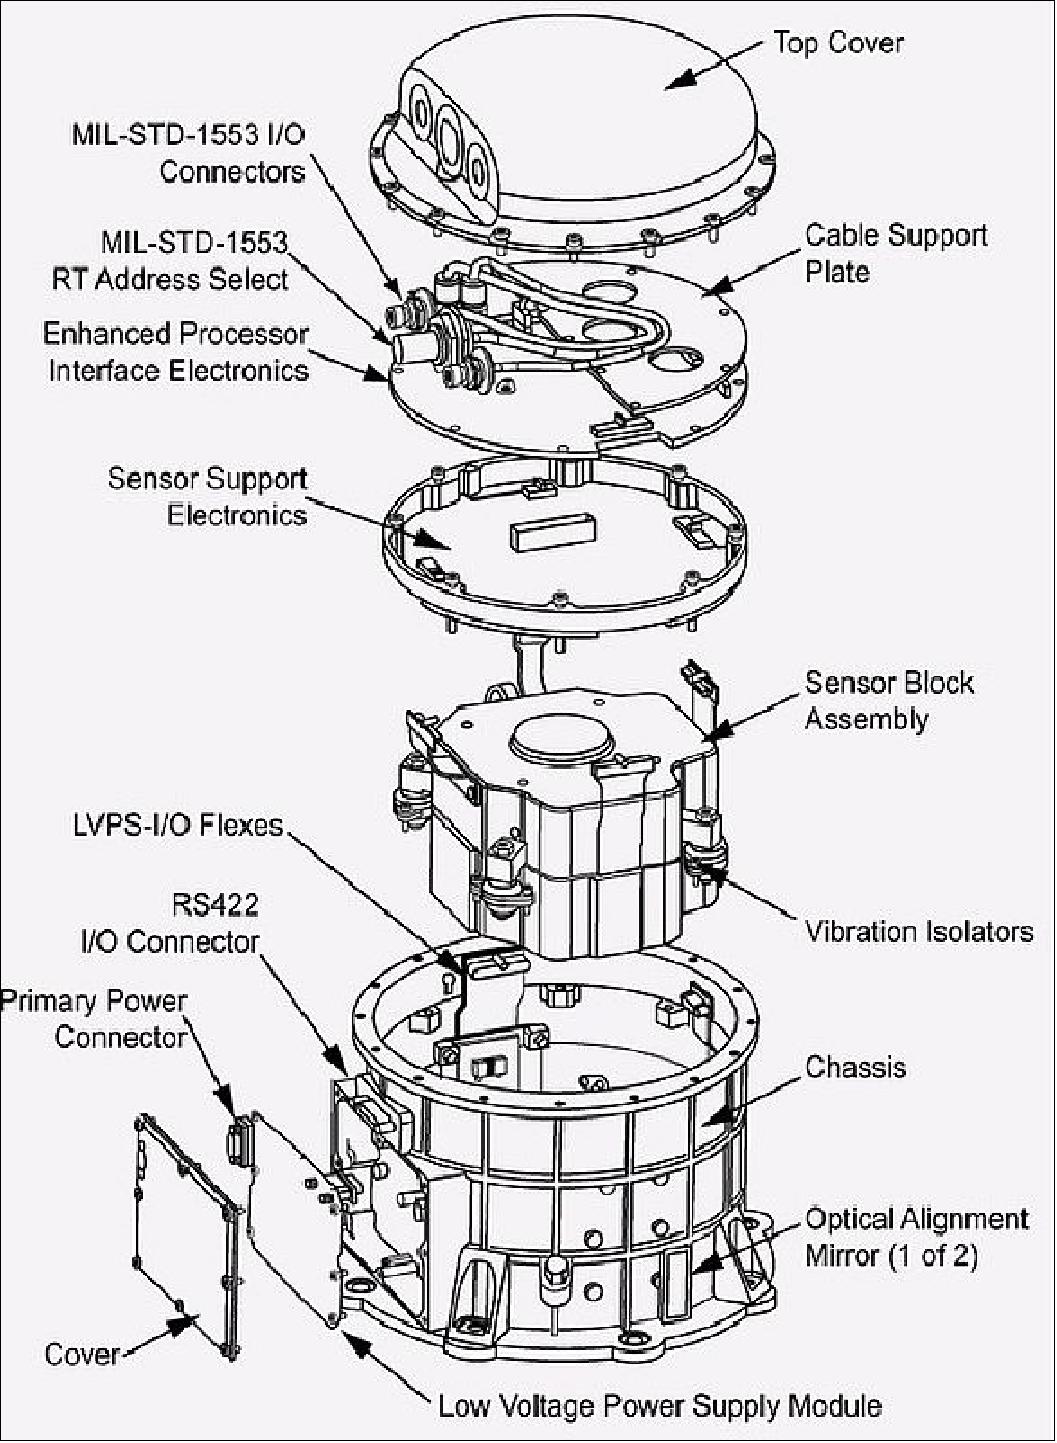 Figure 4: Illustration of the MIMU (image credit: Honeywell)